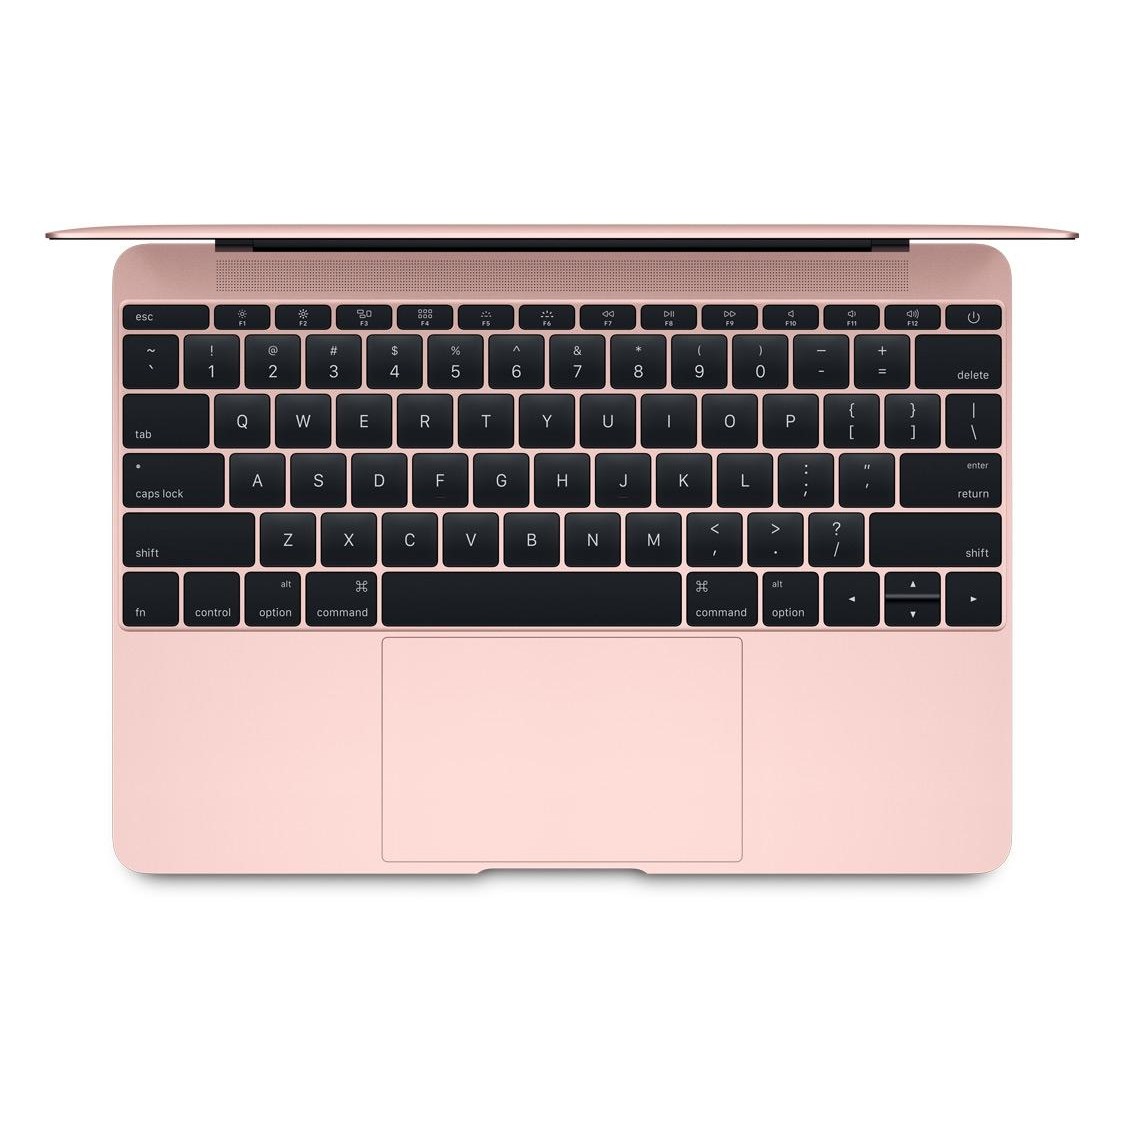 Apple MacBook 12 Rose Gold 2016 (MMGL2) б/у